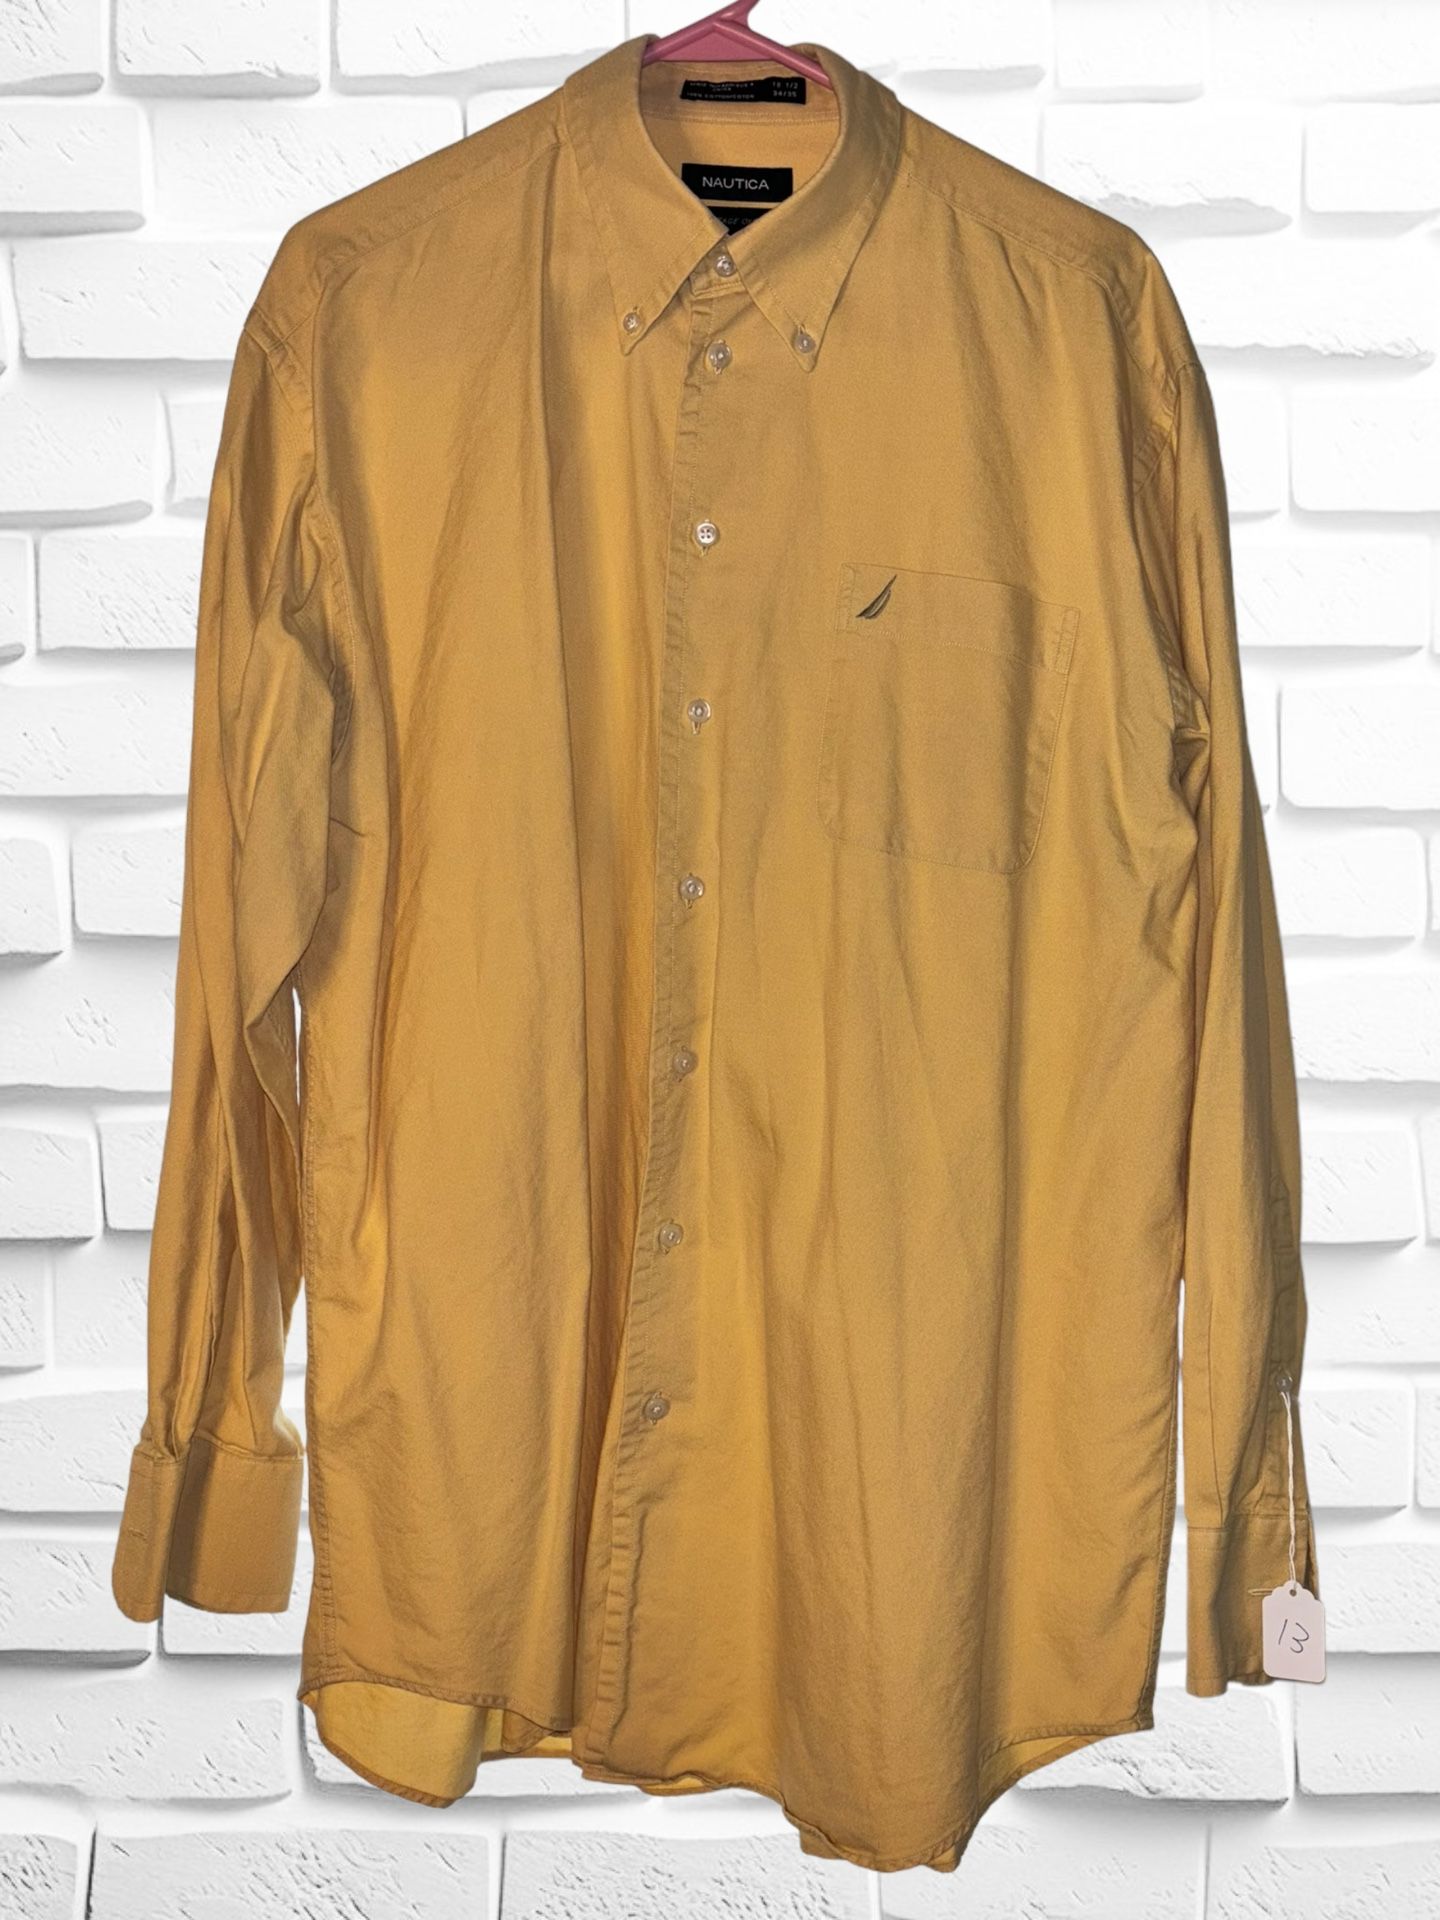 Nautica Men’s 16 1/2 34-35 Pale Yellow Vintage Oxford Long Sleeve Dress Shirt